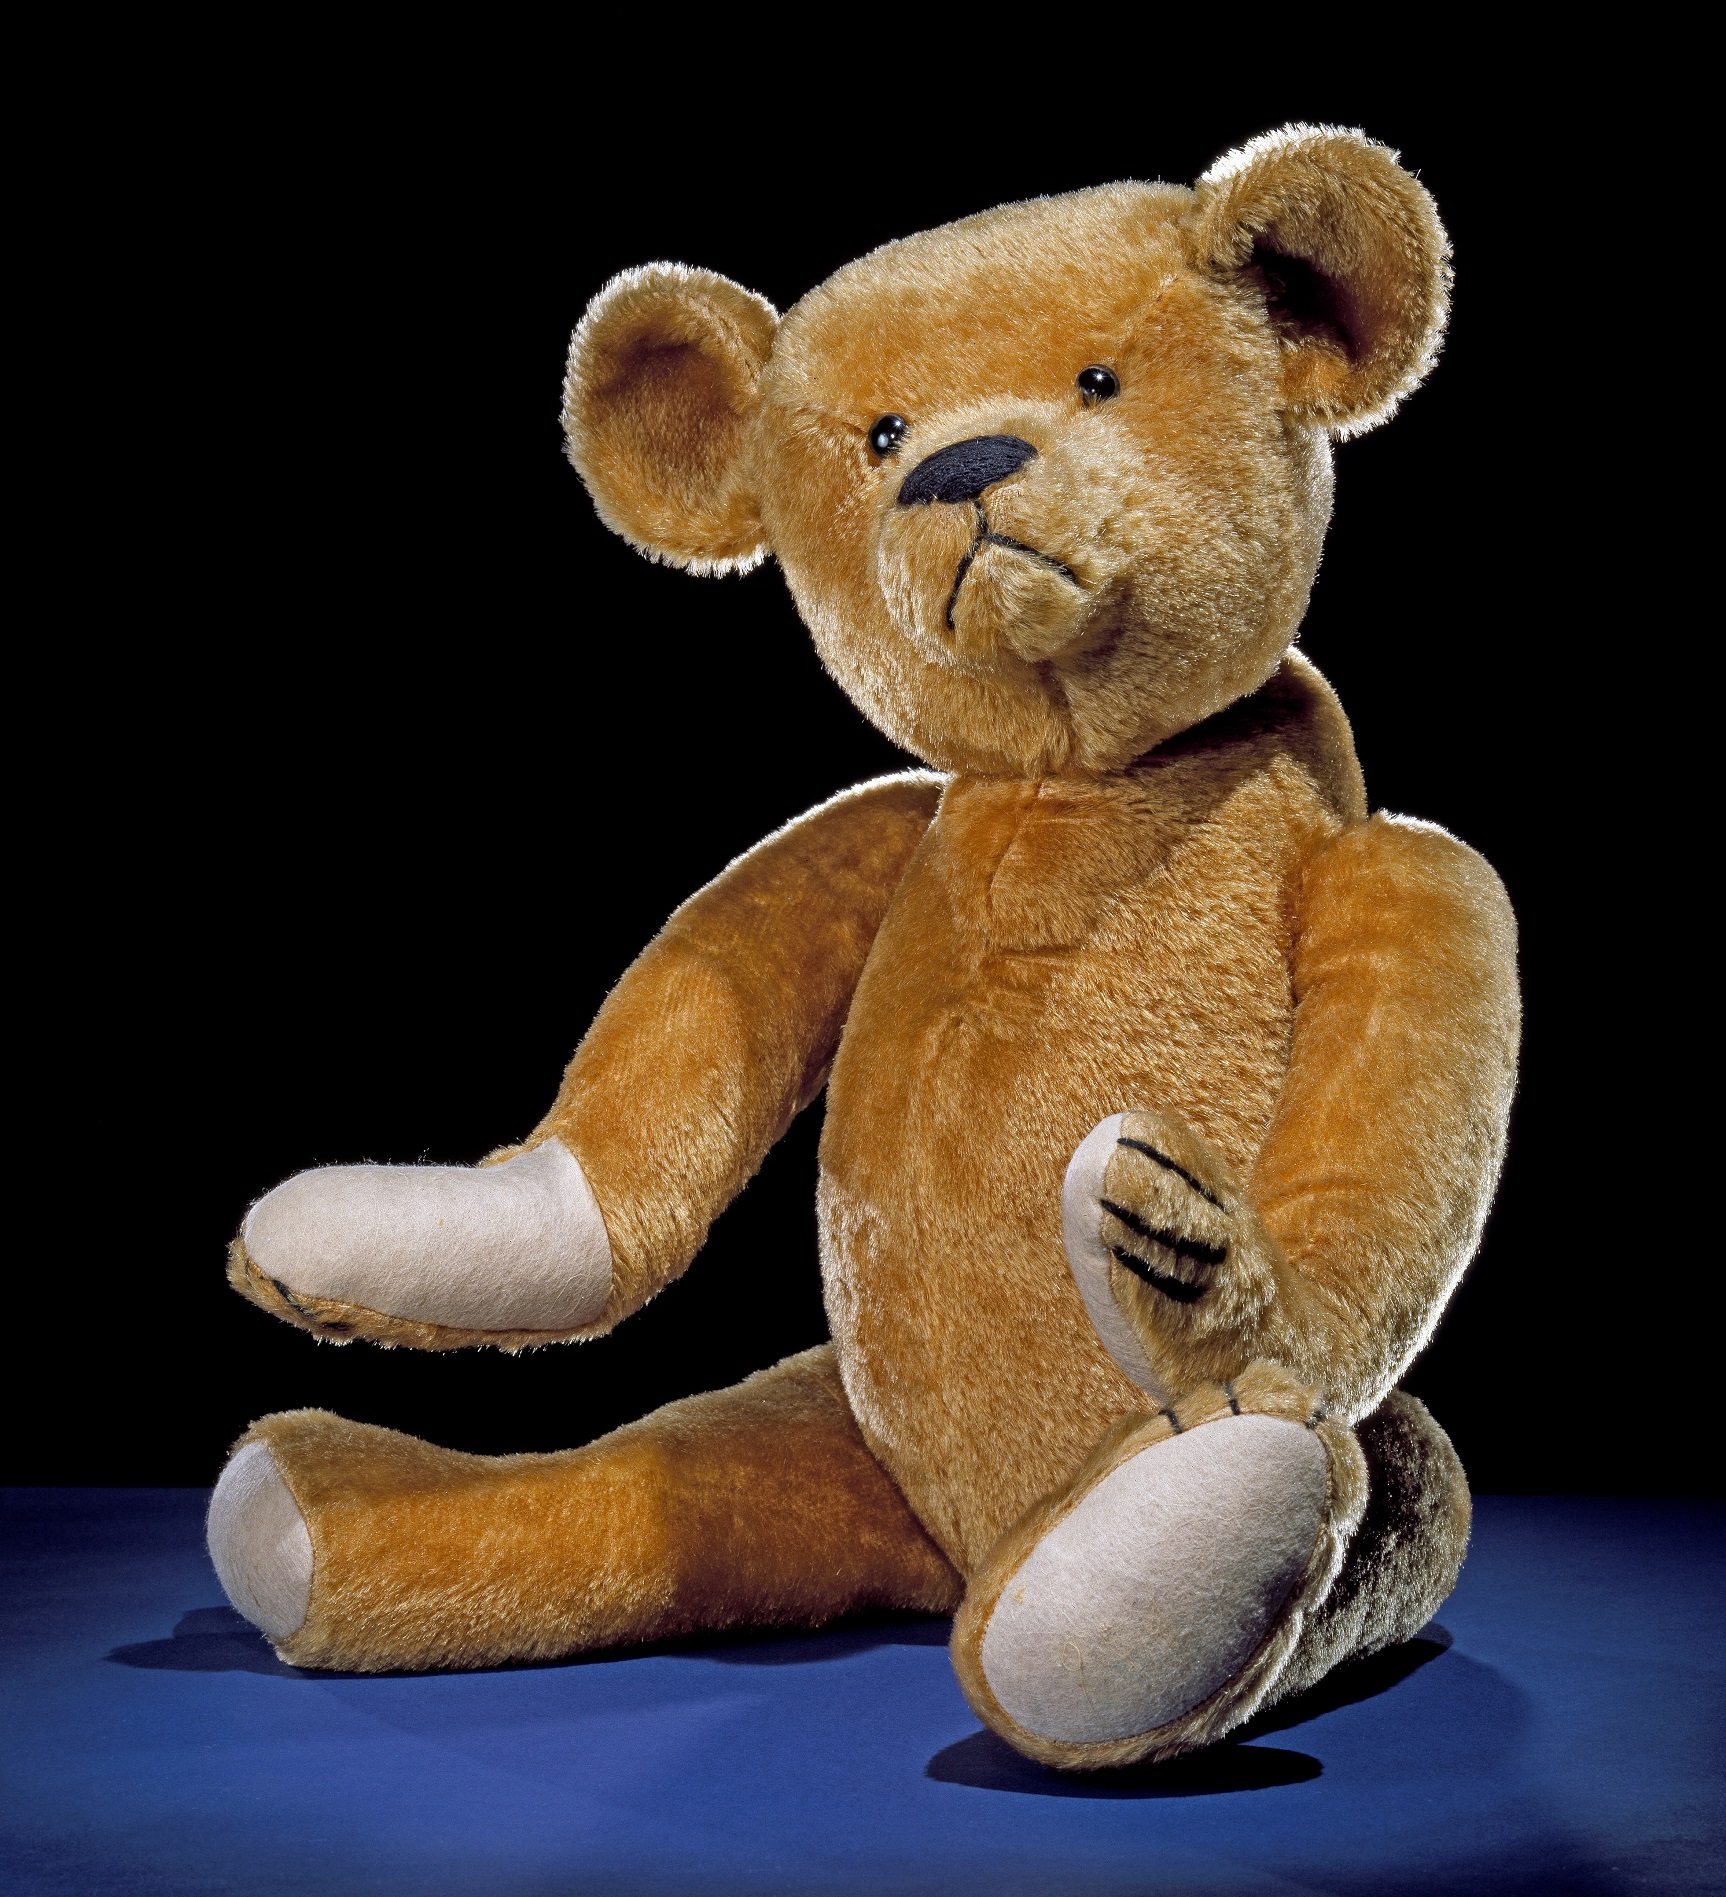 Where is the teddy bear. Название мишек. Плюшевый медведь начала века. Theodore Roosevelt Teddy Bear.